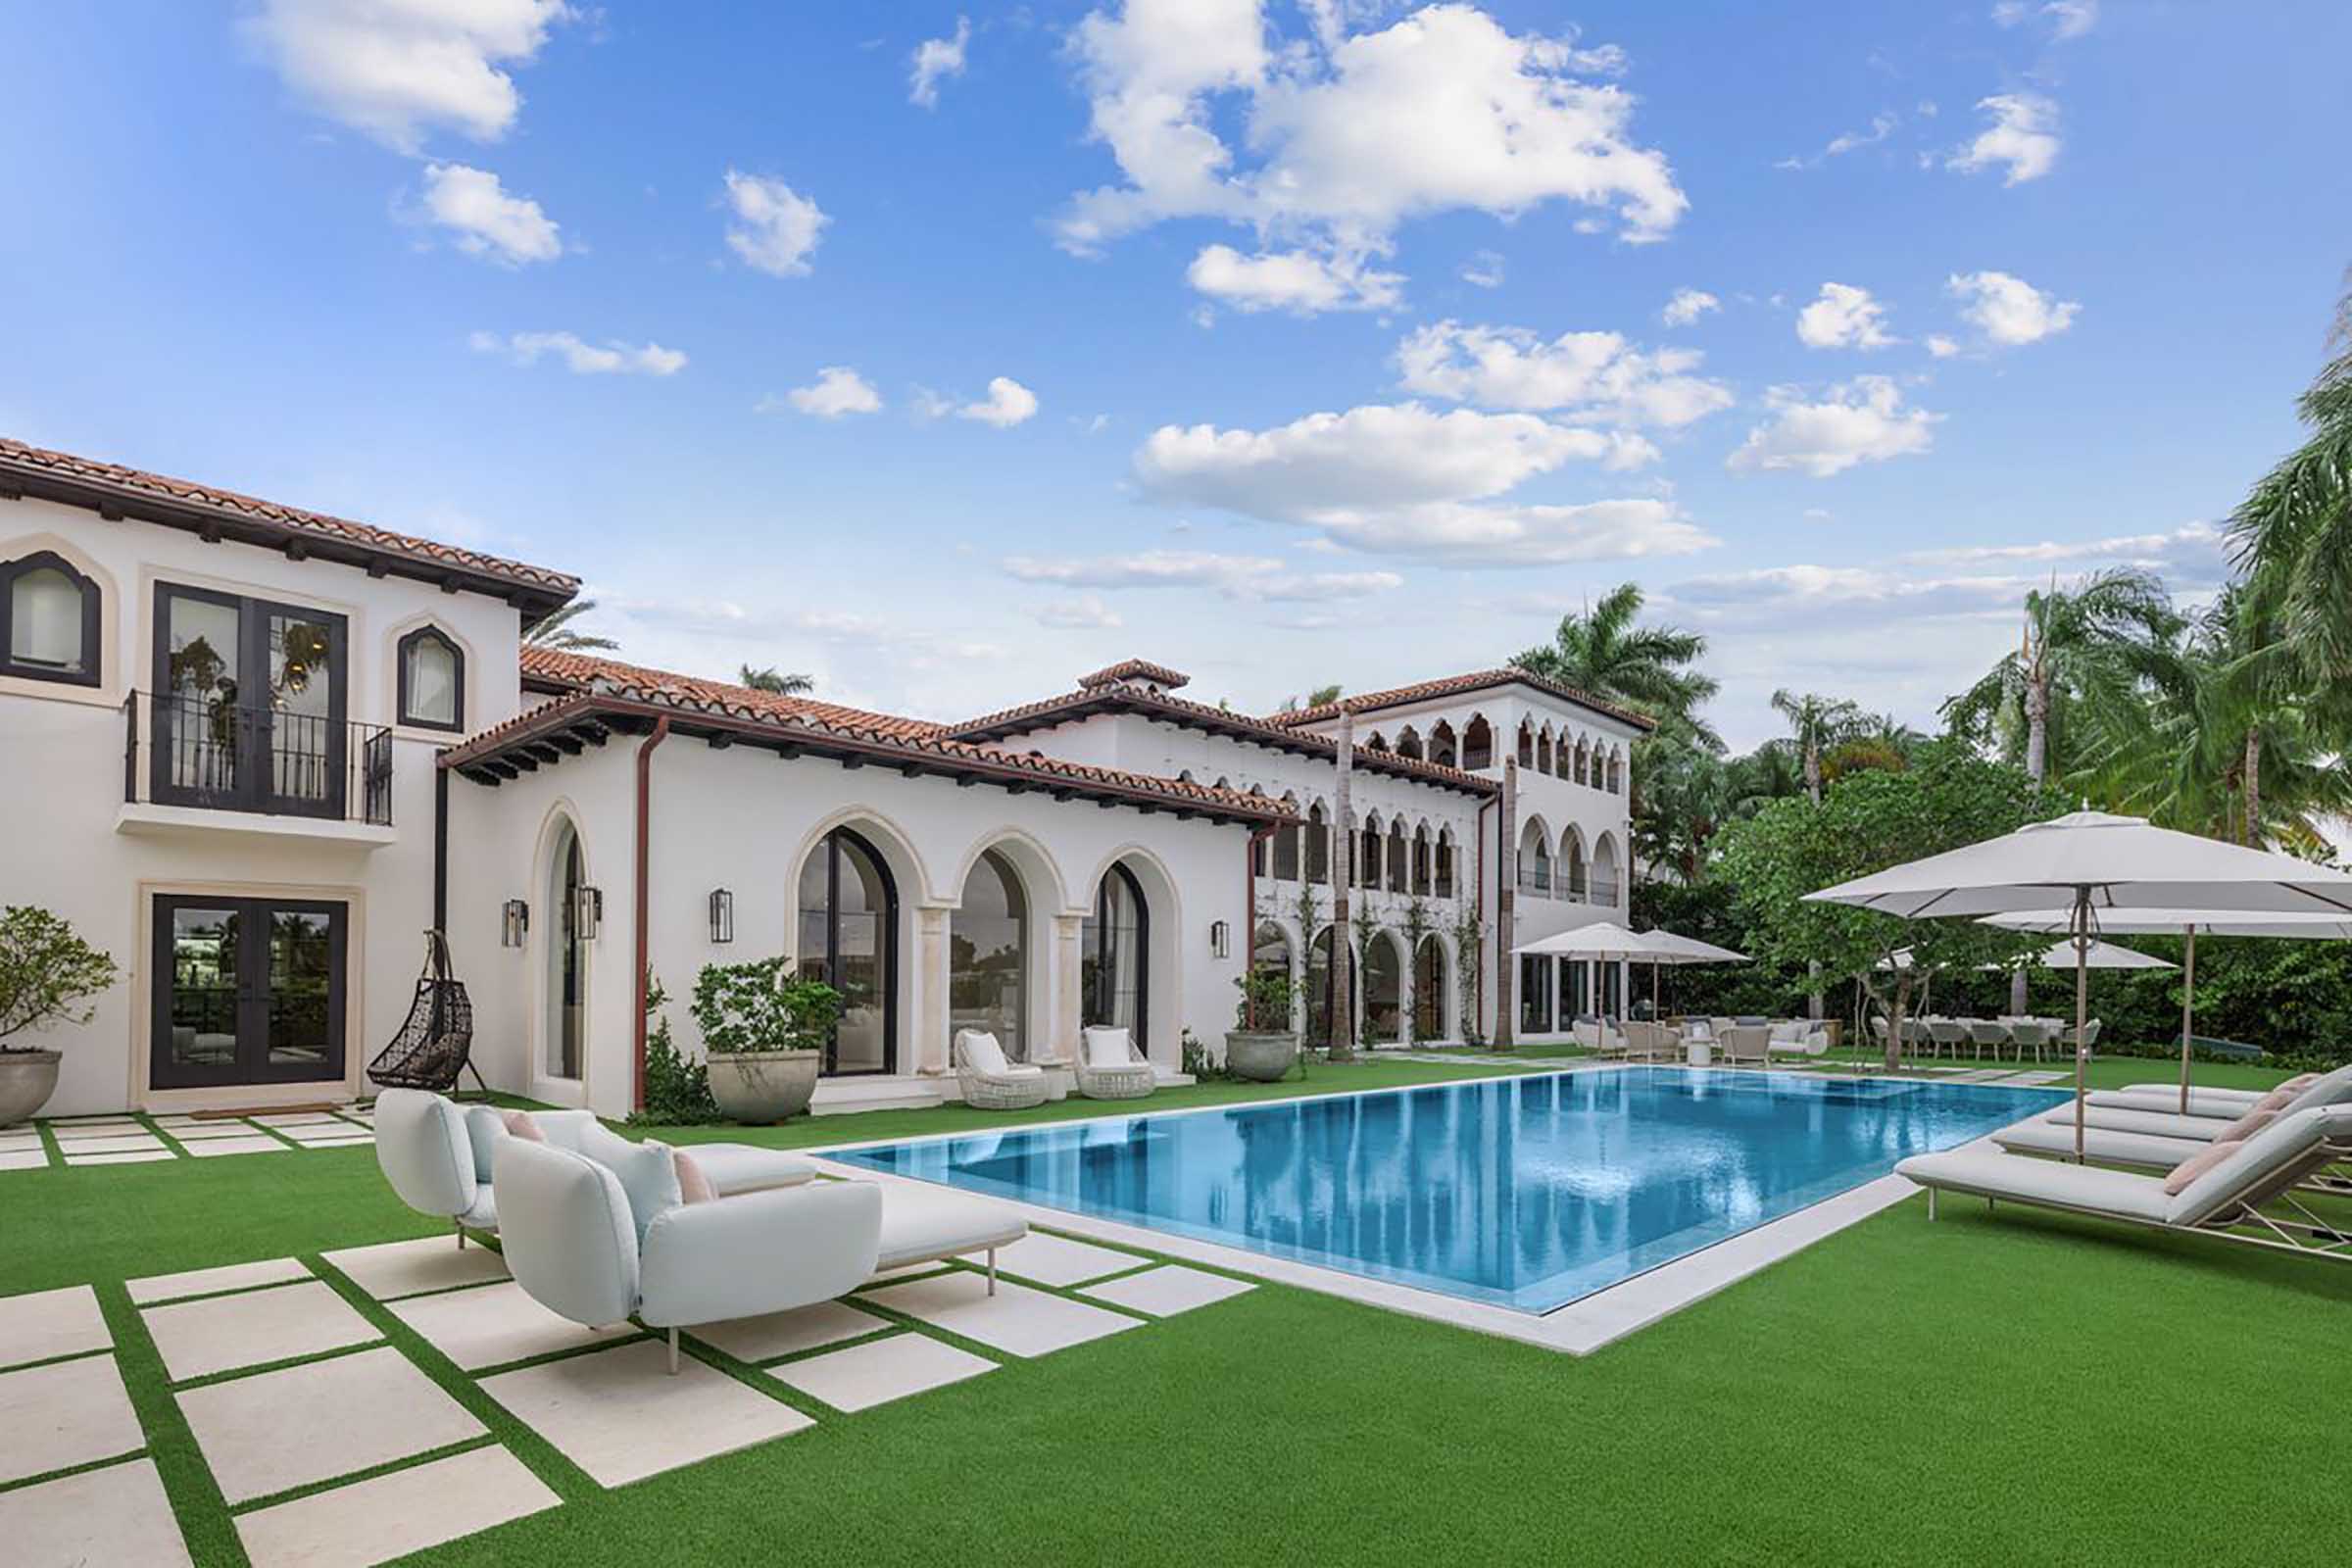 La Gorce Island Estate, Formerly Cher’s Miami Beach Home Lists For $42.5M